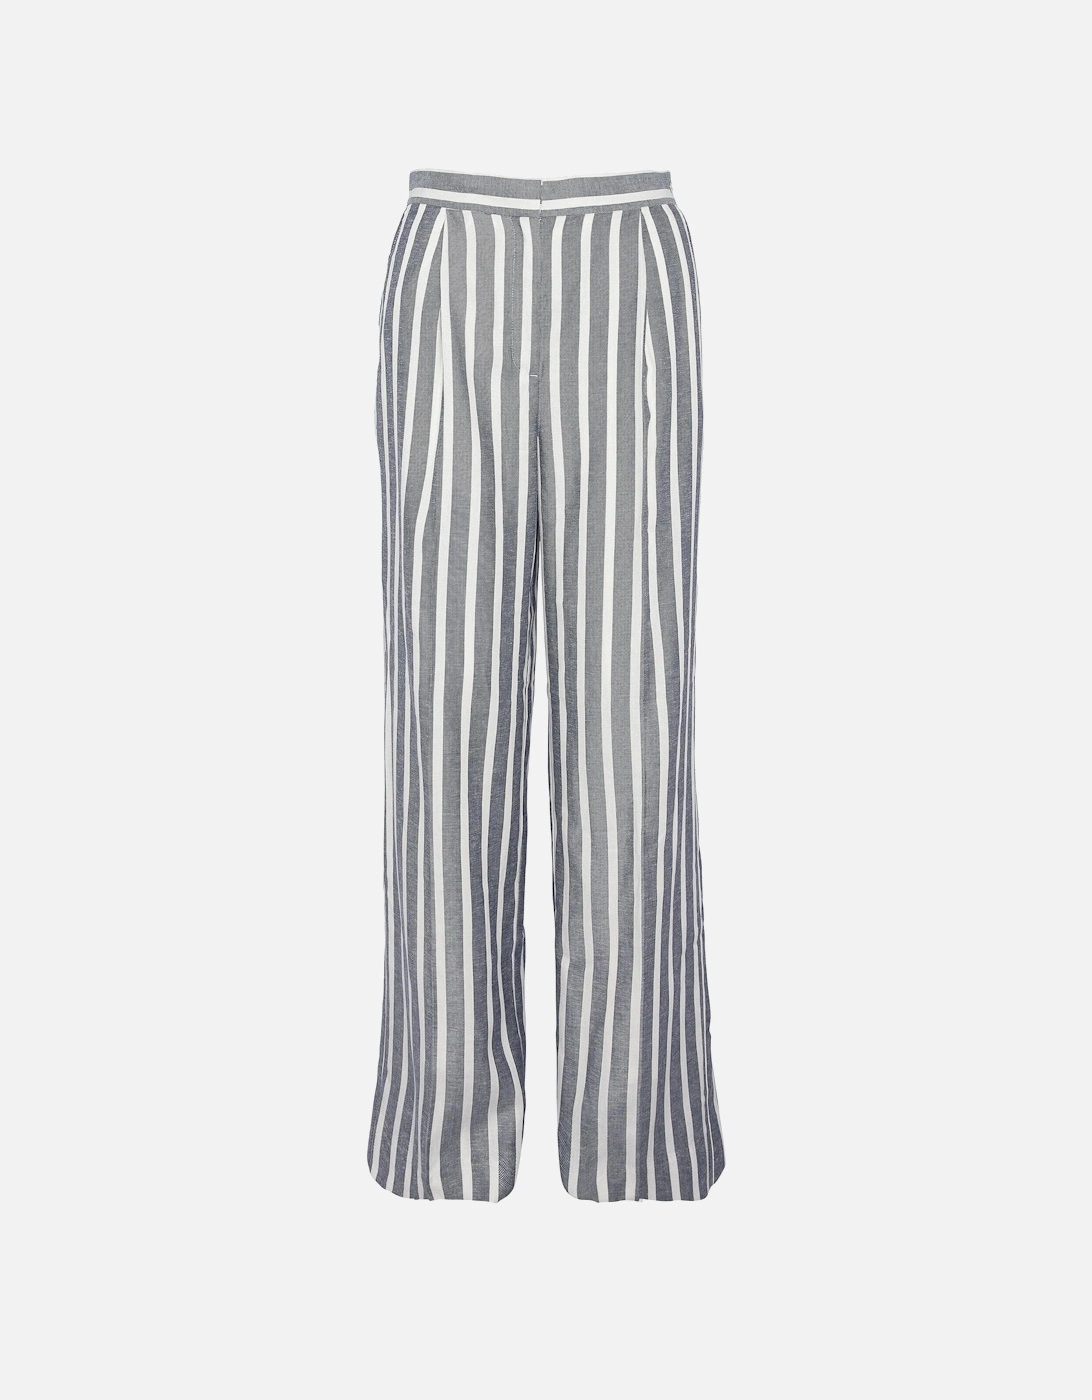 Annalise Womens Linen Trousers